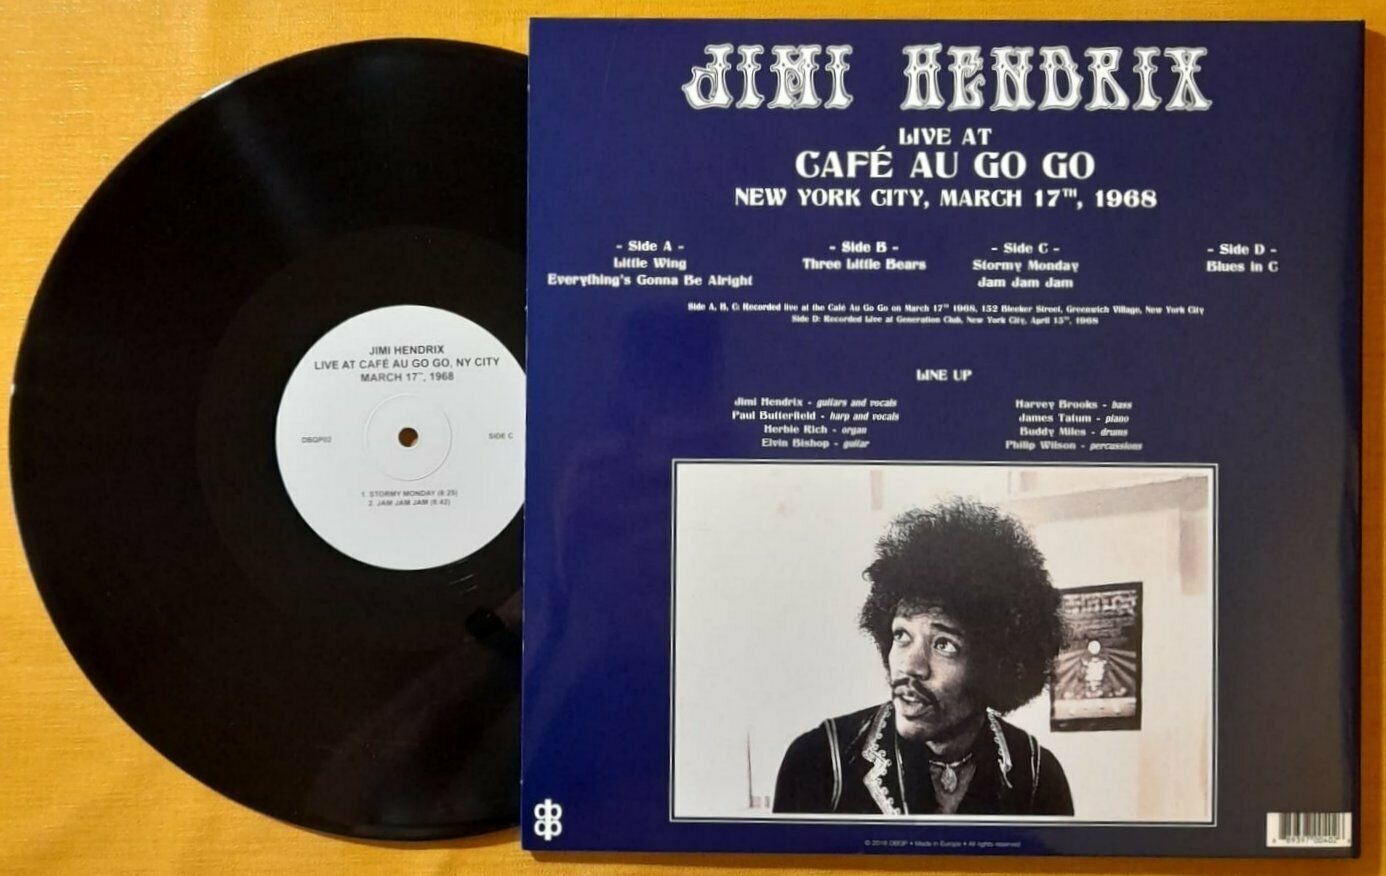 popsike.com - JIMI HENDRIX : CAFE AU GO GO / NEW YORK CITY 1968 2x LP's  (SEALED) ONLY 1 COPY - auction details